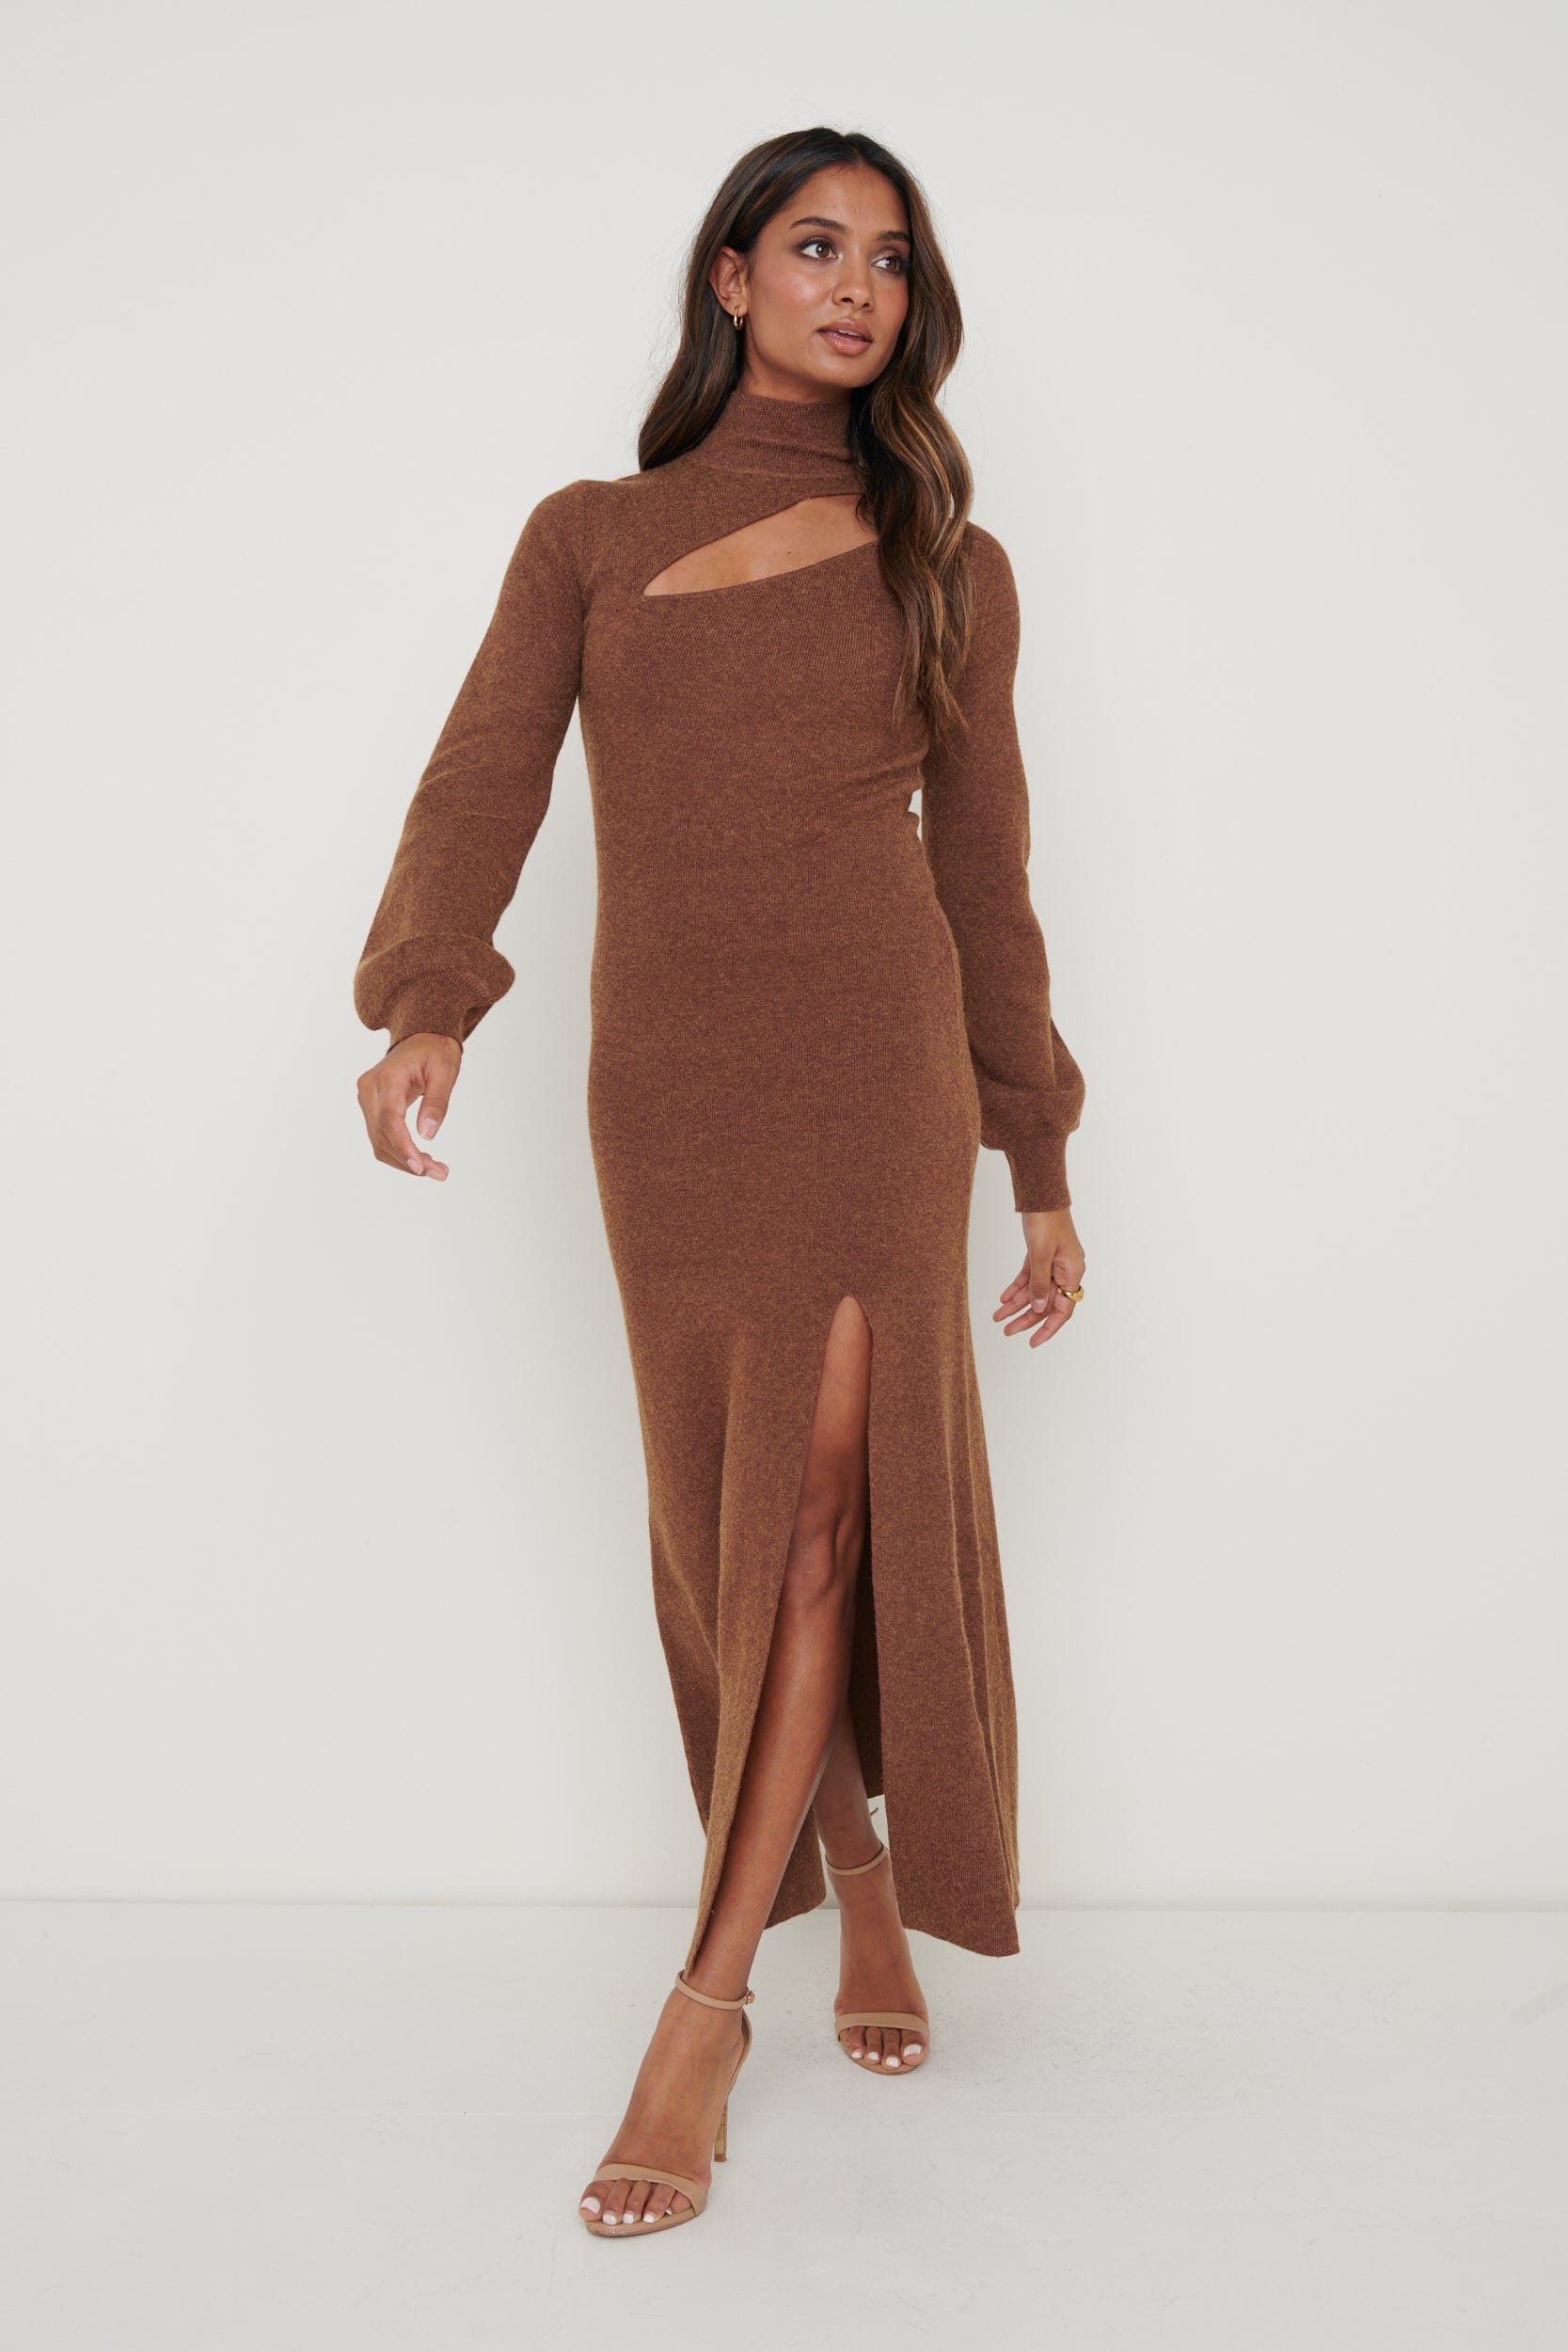 Jolie Cut Out Knit Dress - Chocolate Brown